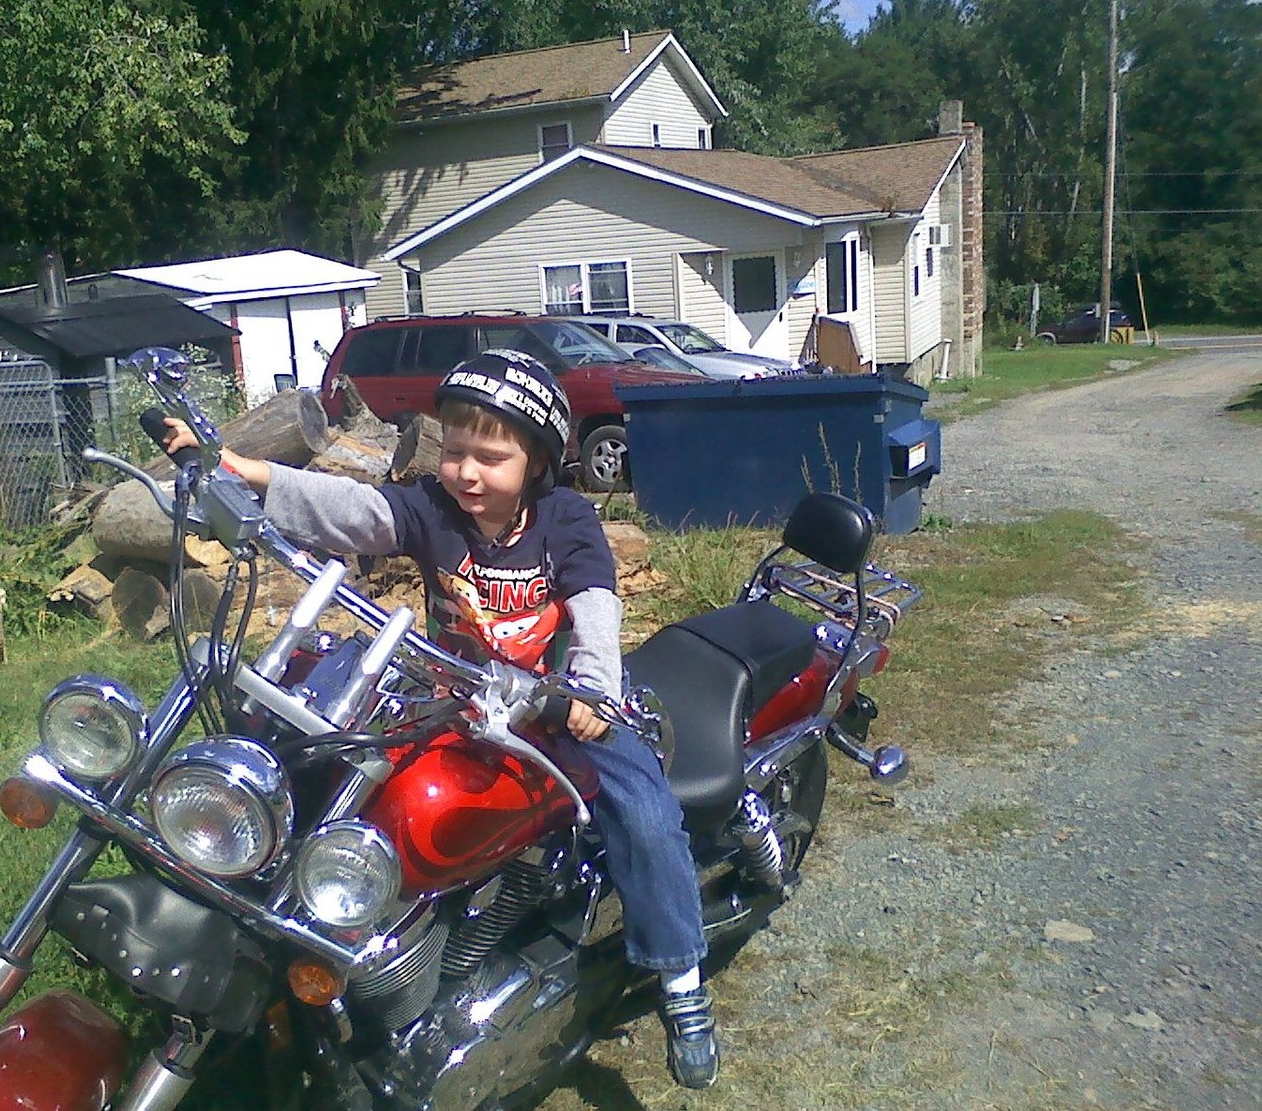 bobby on motorcycle.jpg